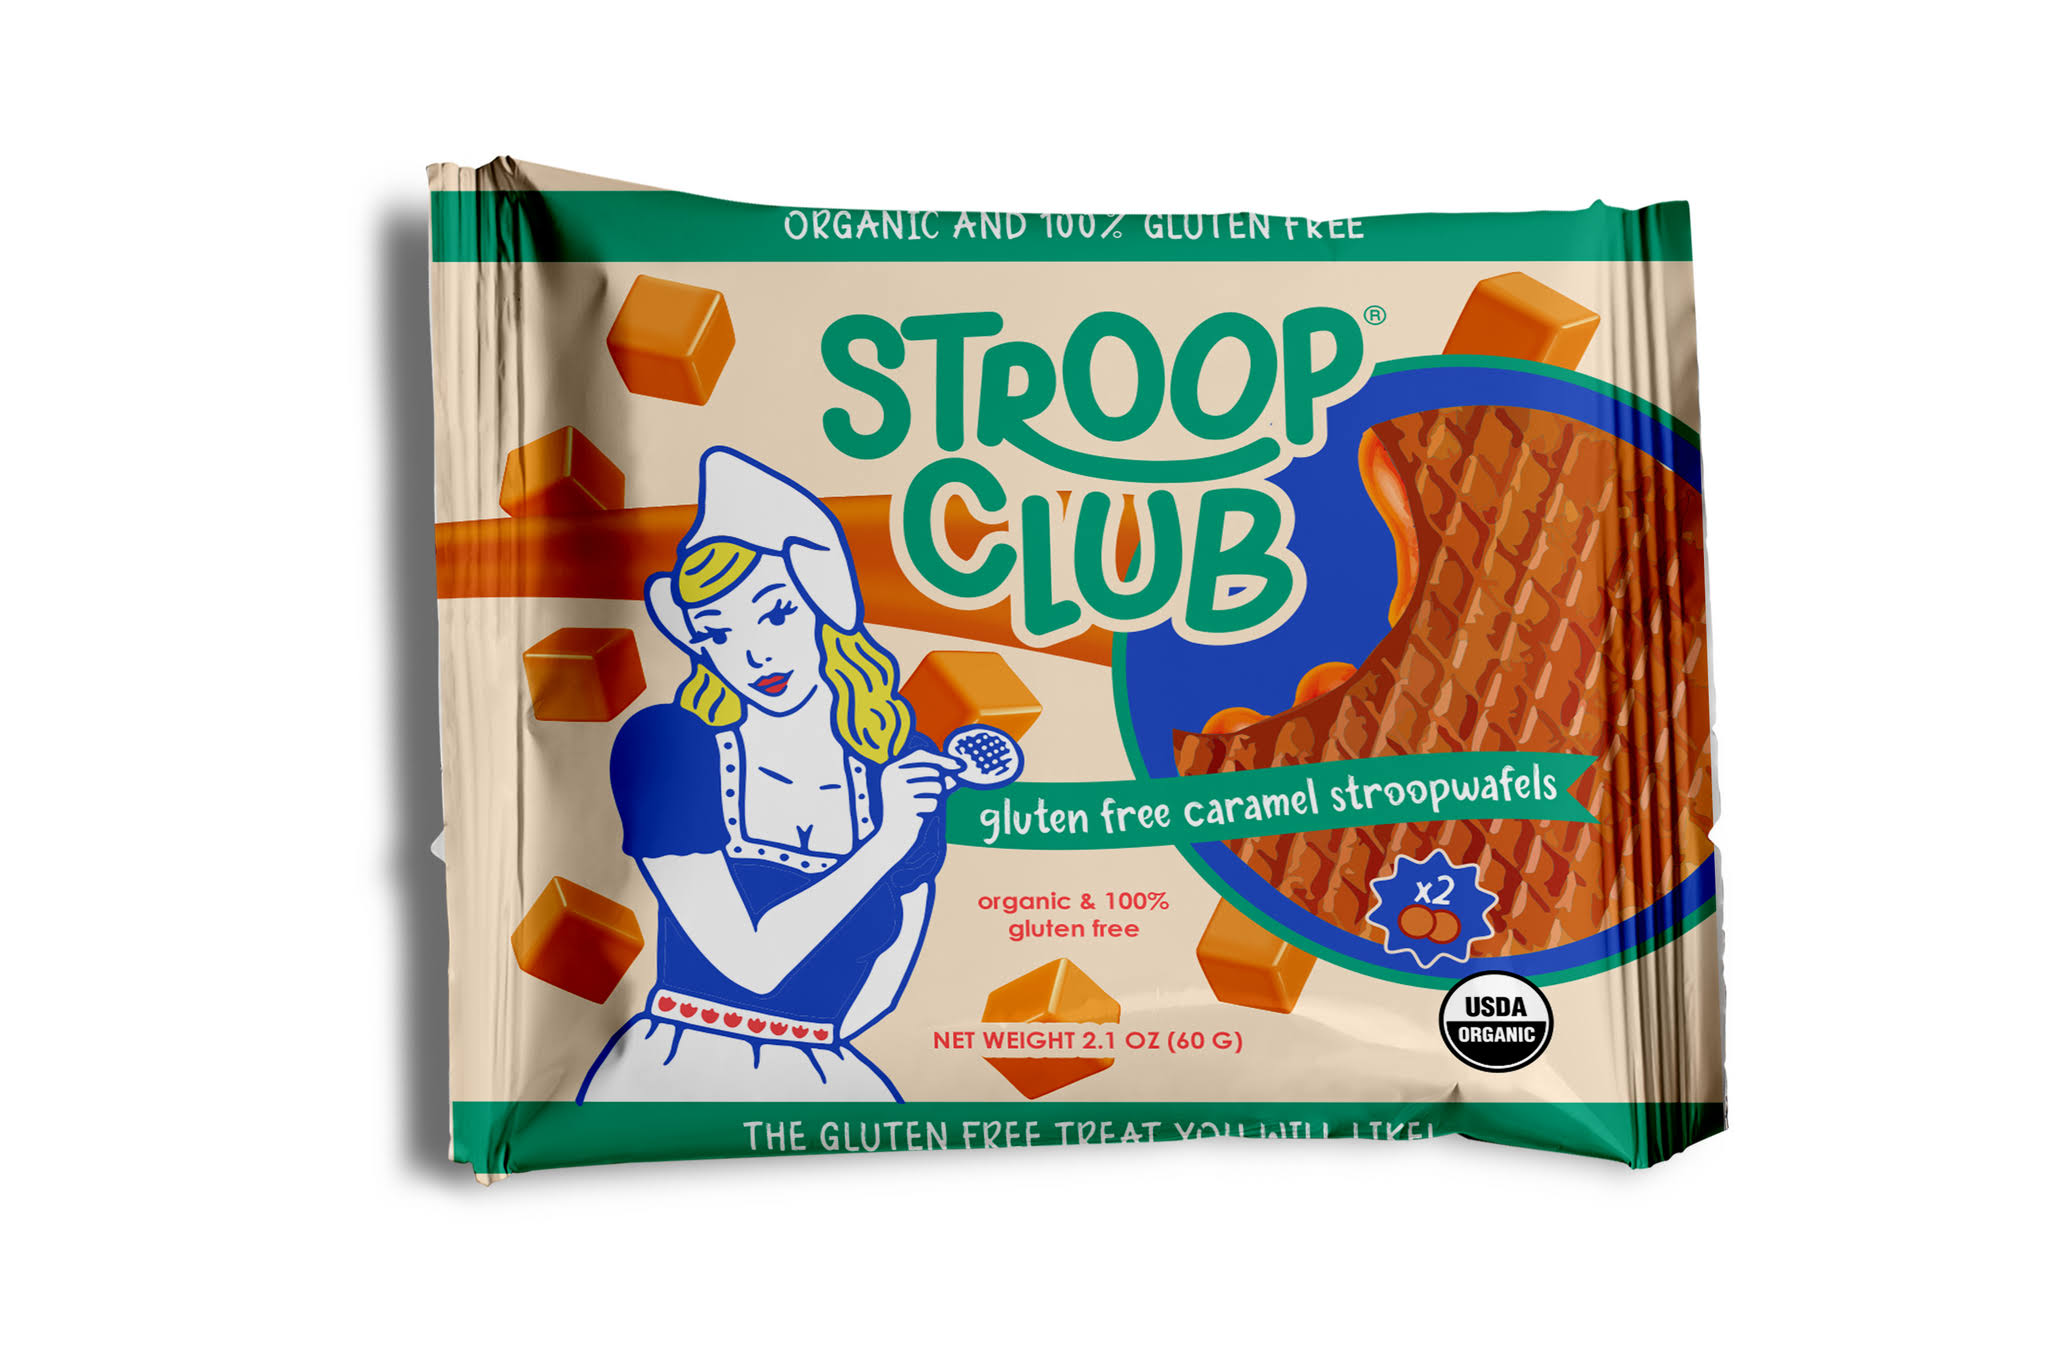 Stroop Club Gluten Free Caramel Stroopwafels 2.3 oz